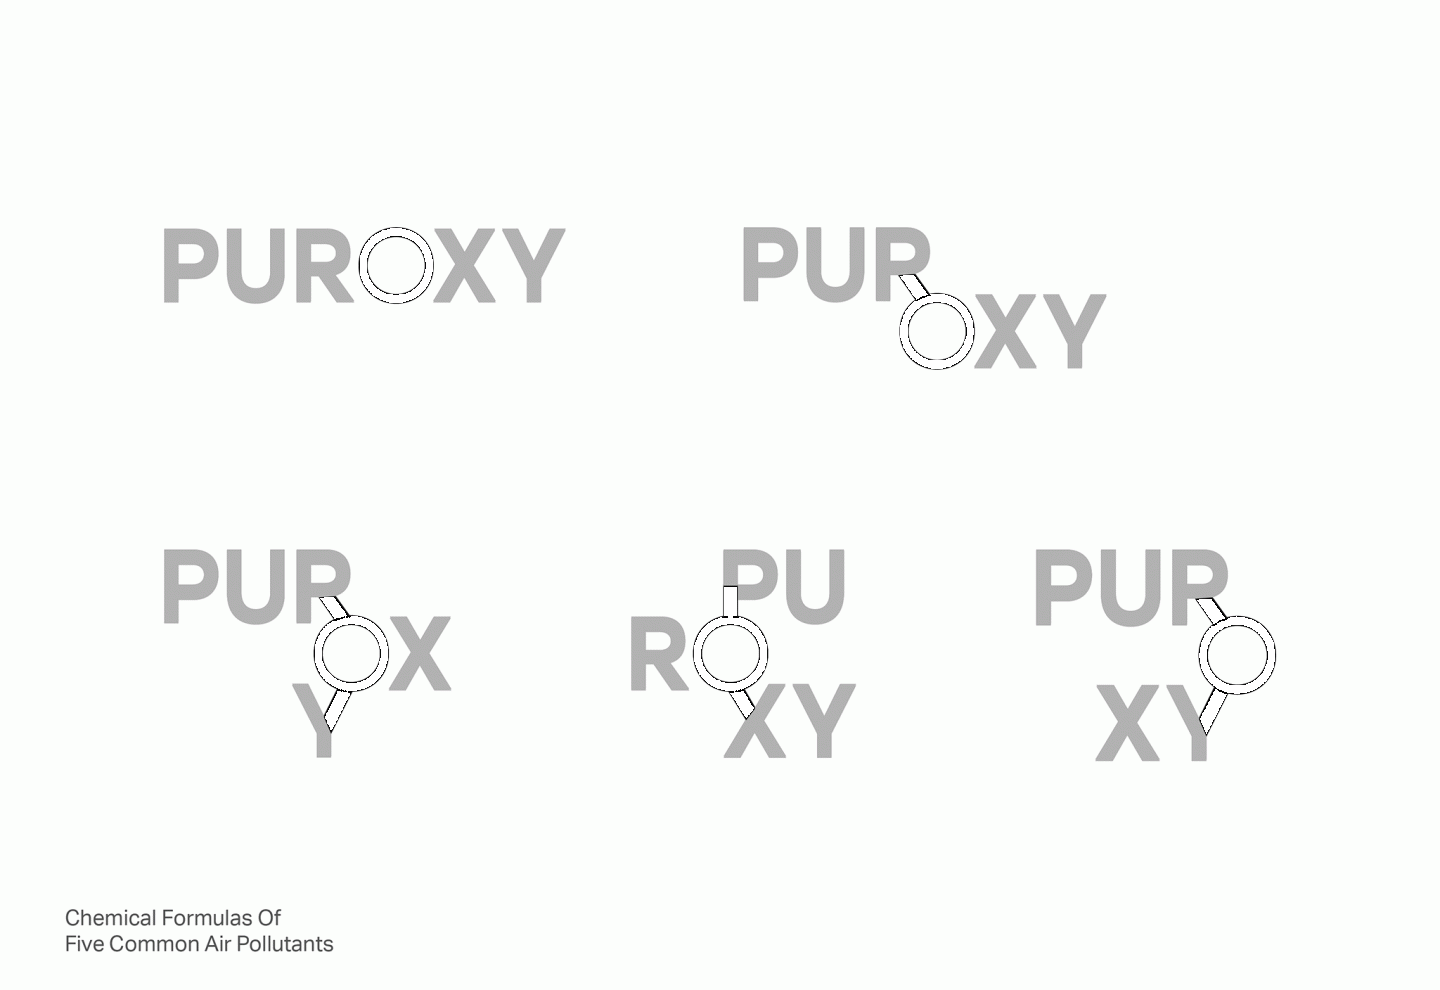 PUROXY